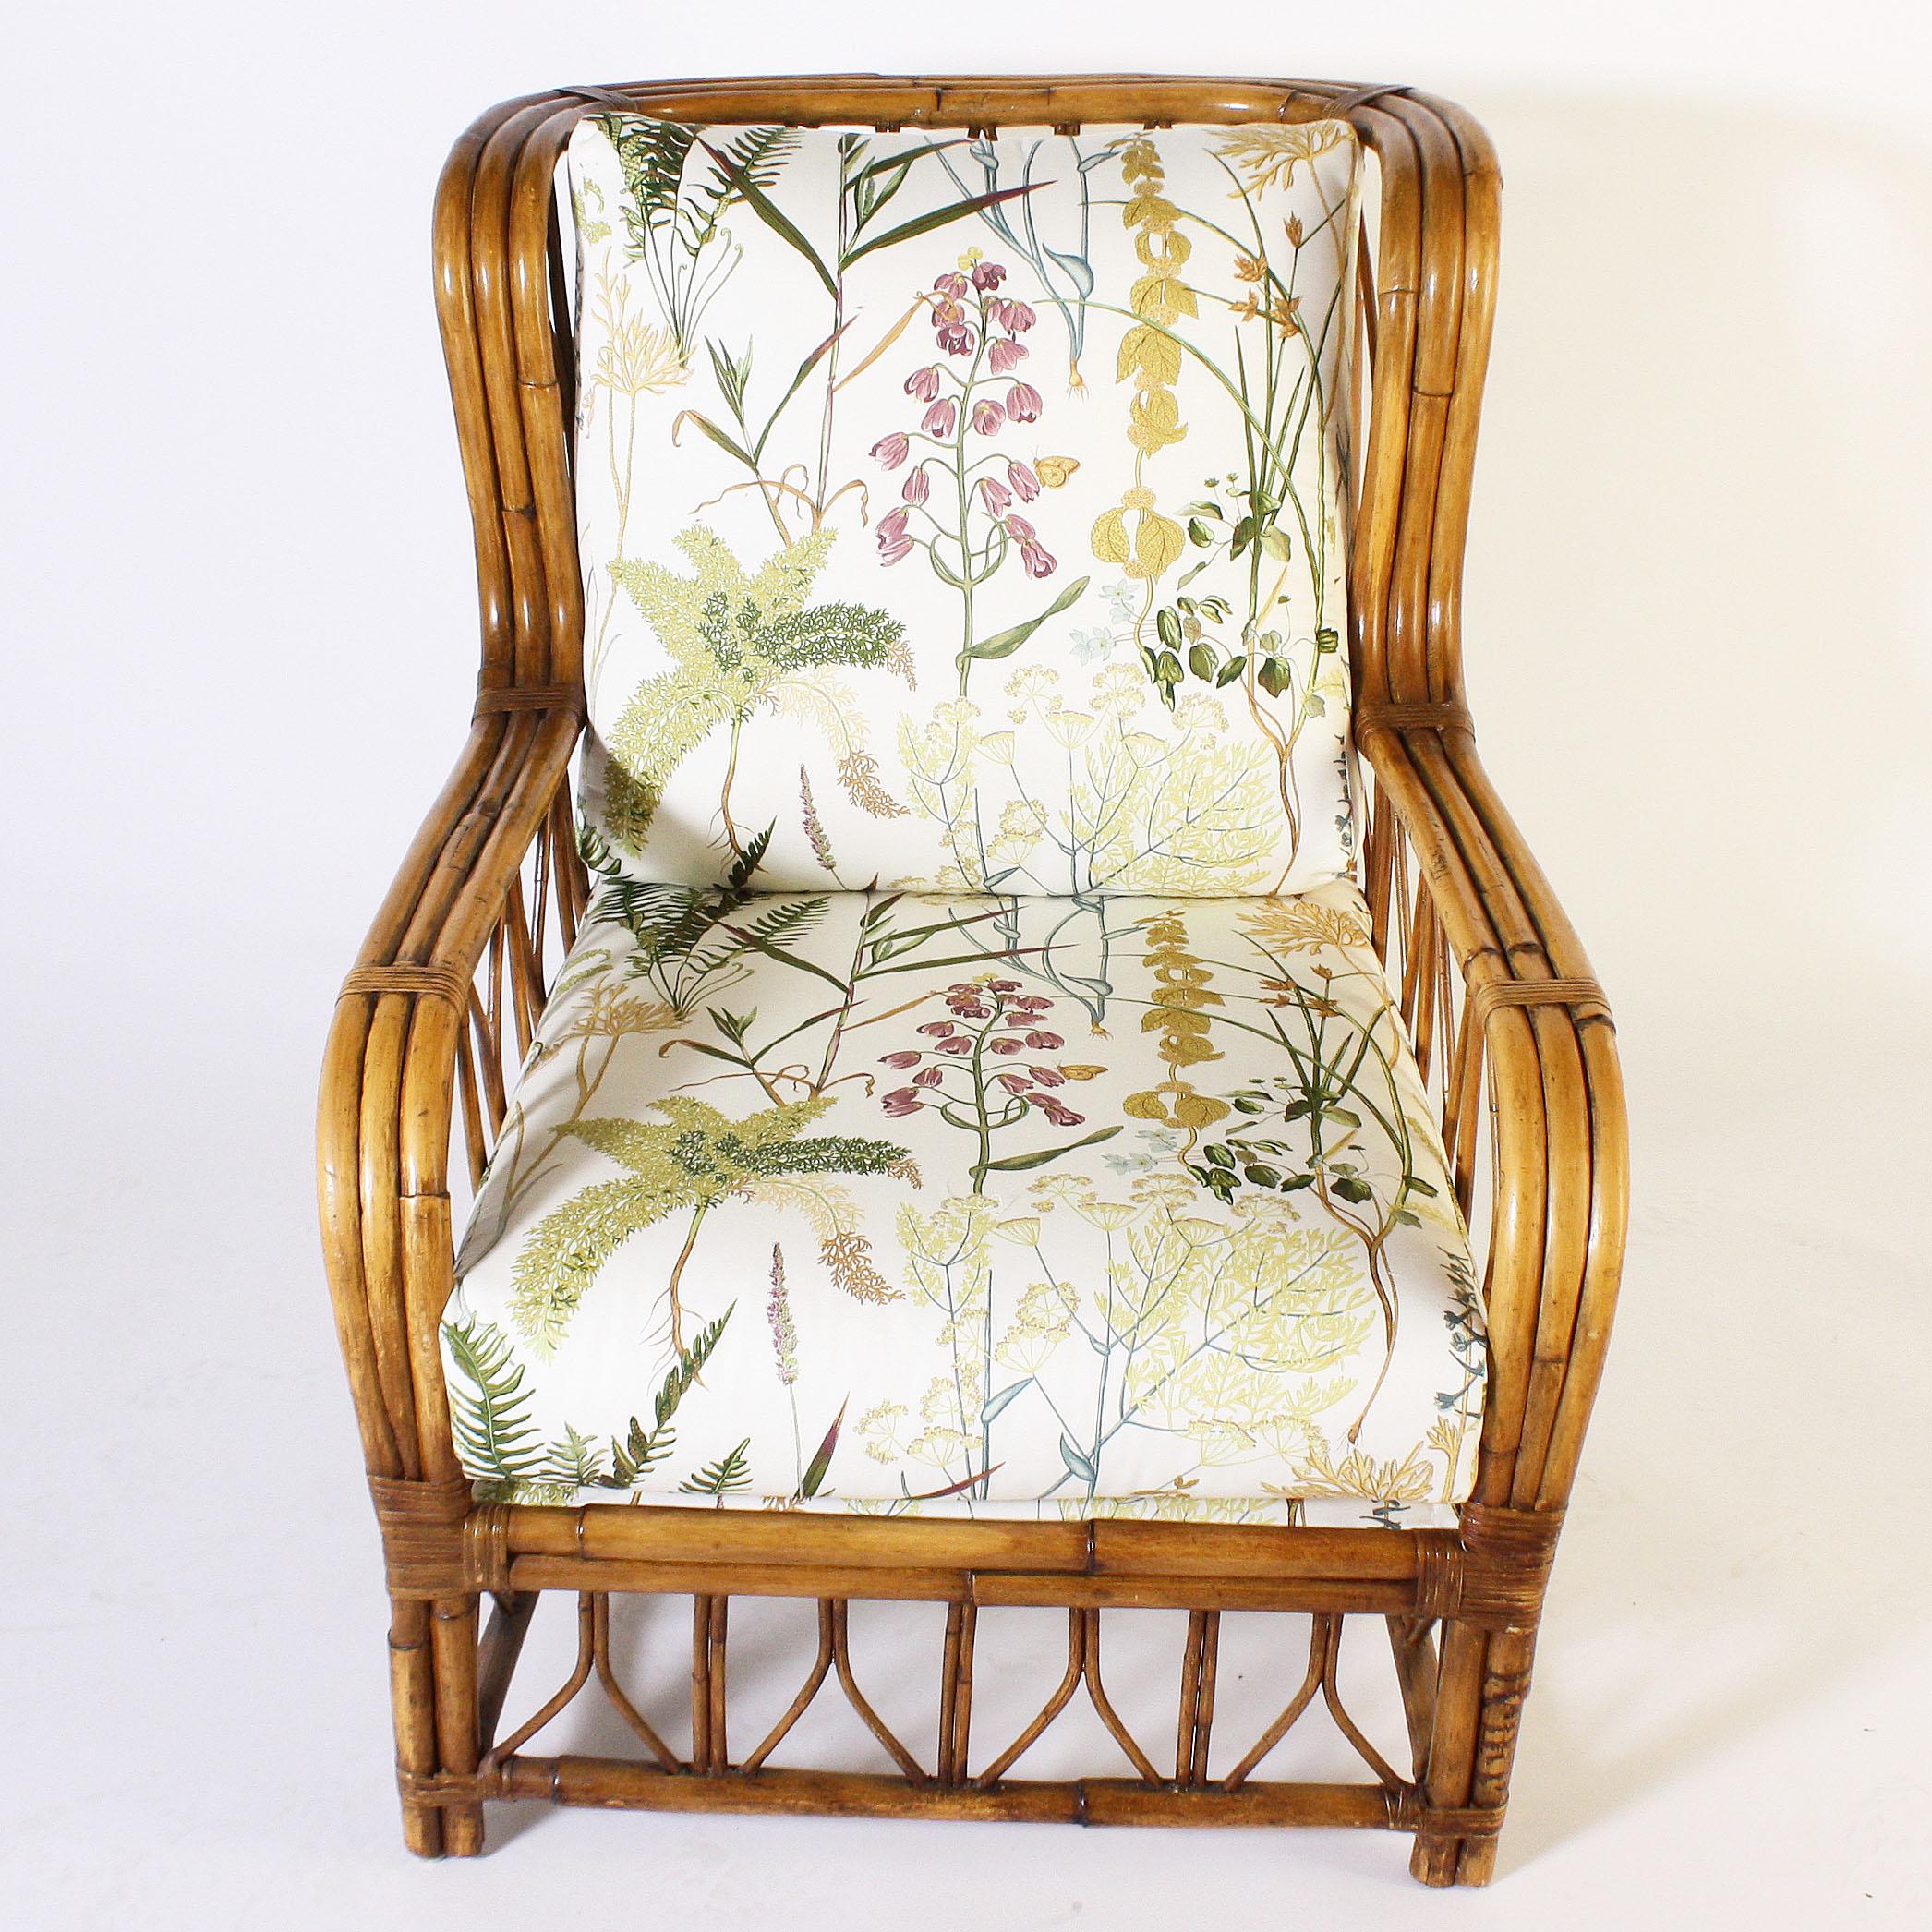 Rattan chair with botanical print, circa 1960.
$3900.